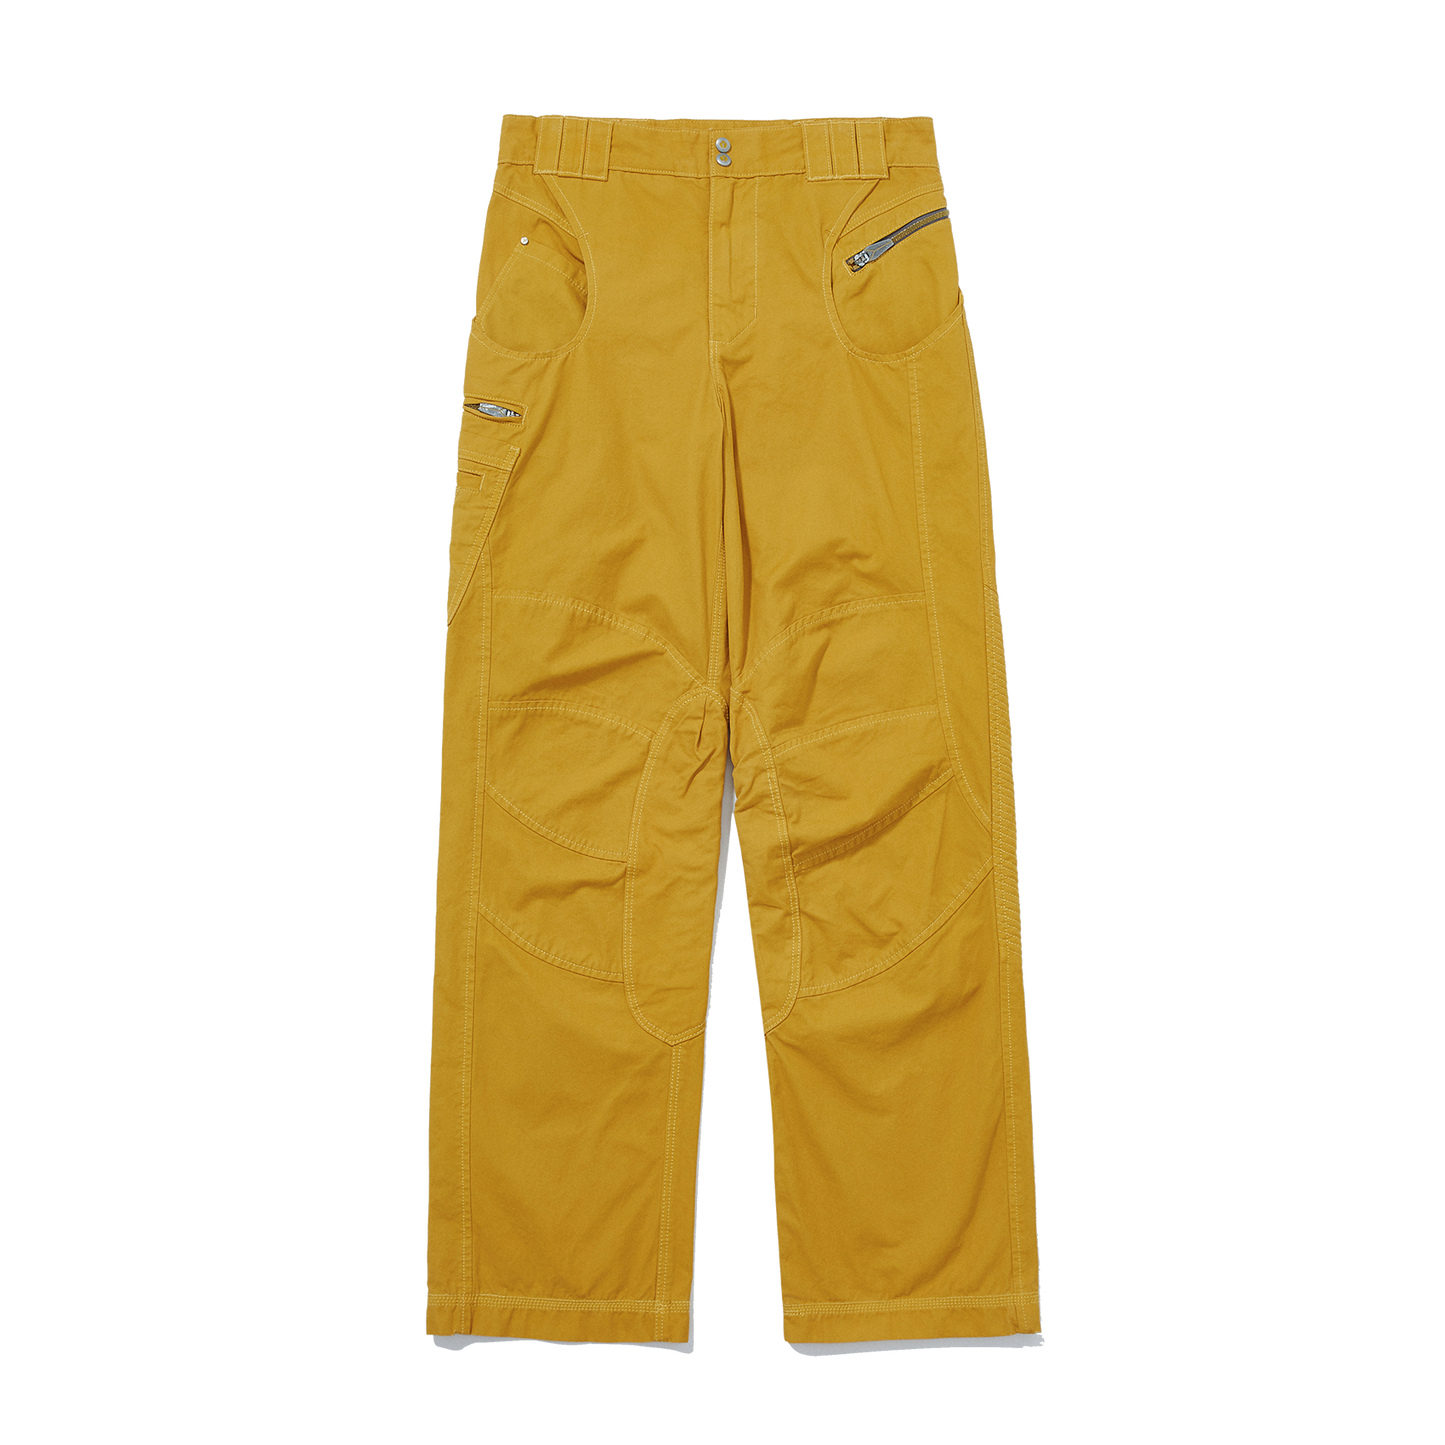 KILLWHY·Builder Pants 2 “建筑工作裤”